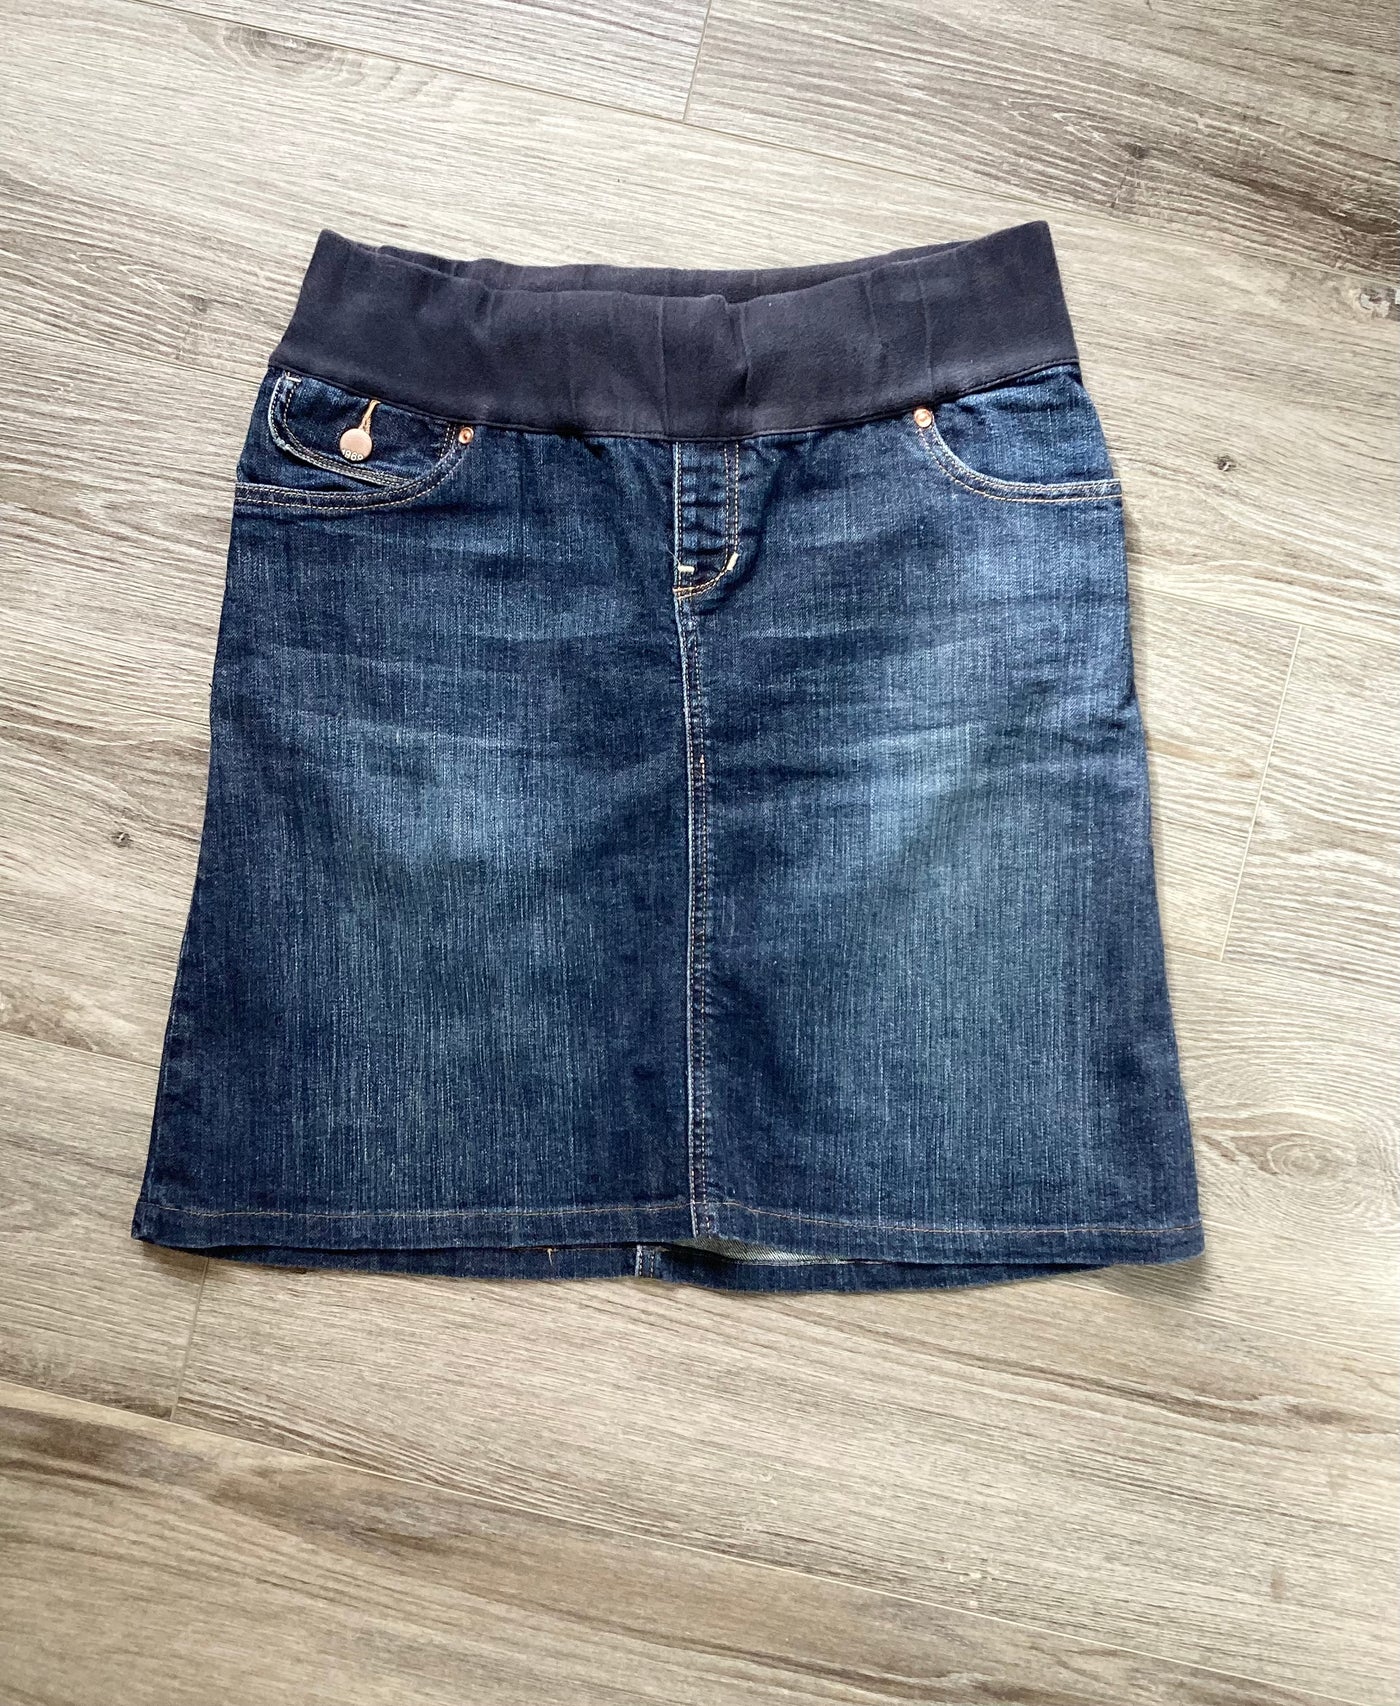 GAP Maternity blue denim underbump skirt - Size 28/6 (Approx UK 10)